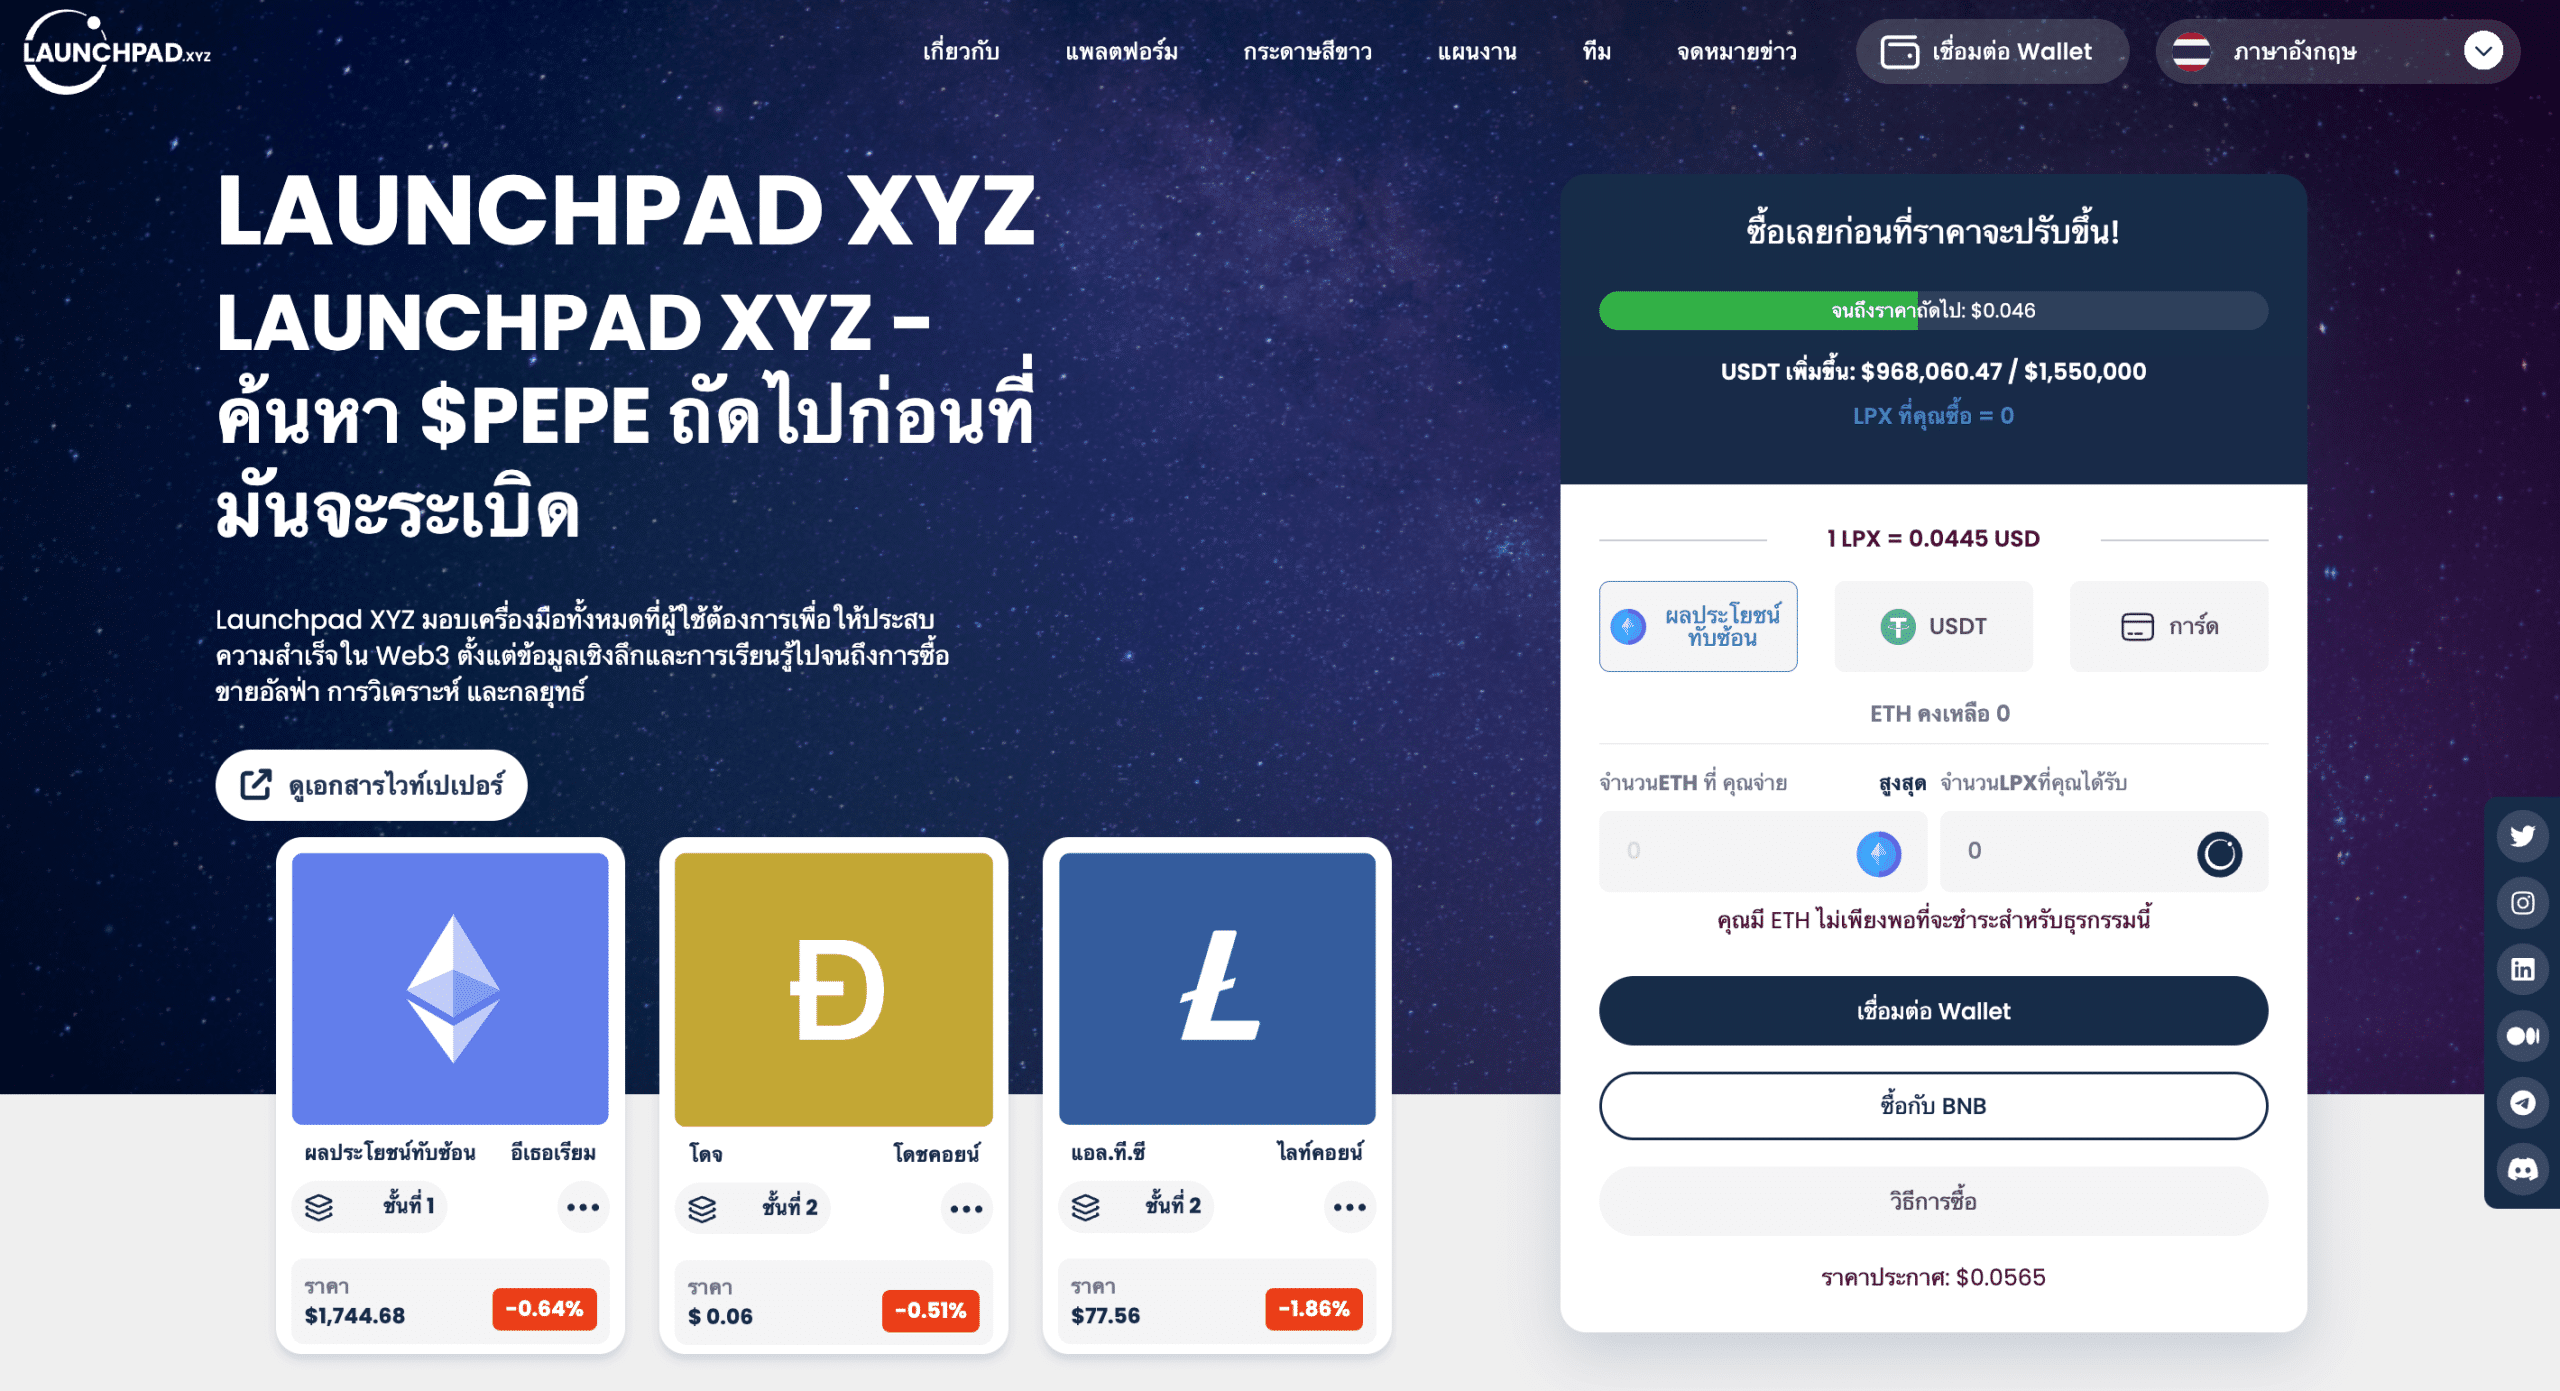 Launchpad XYZ เหรียญคริปโตยอดนิยม